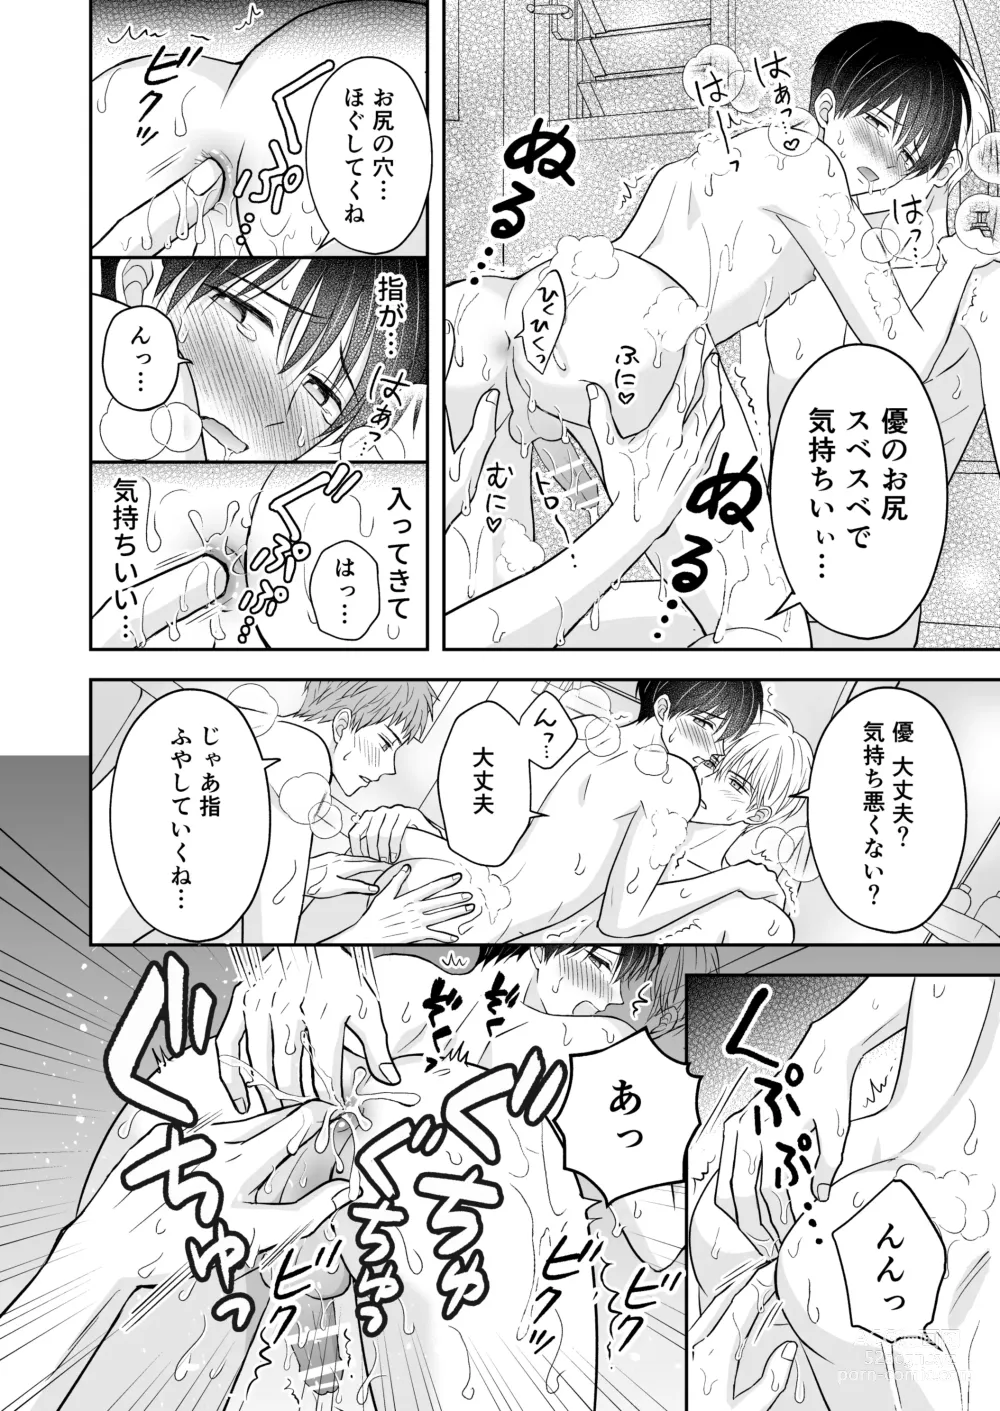 Page 17 of doujinshi 3-nin wa Nakayoshi